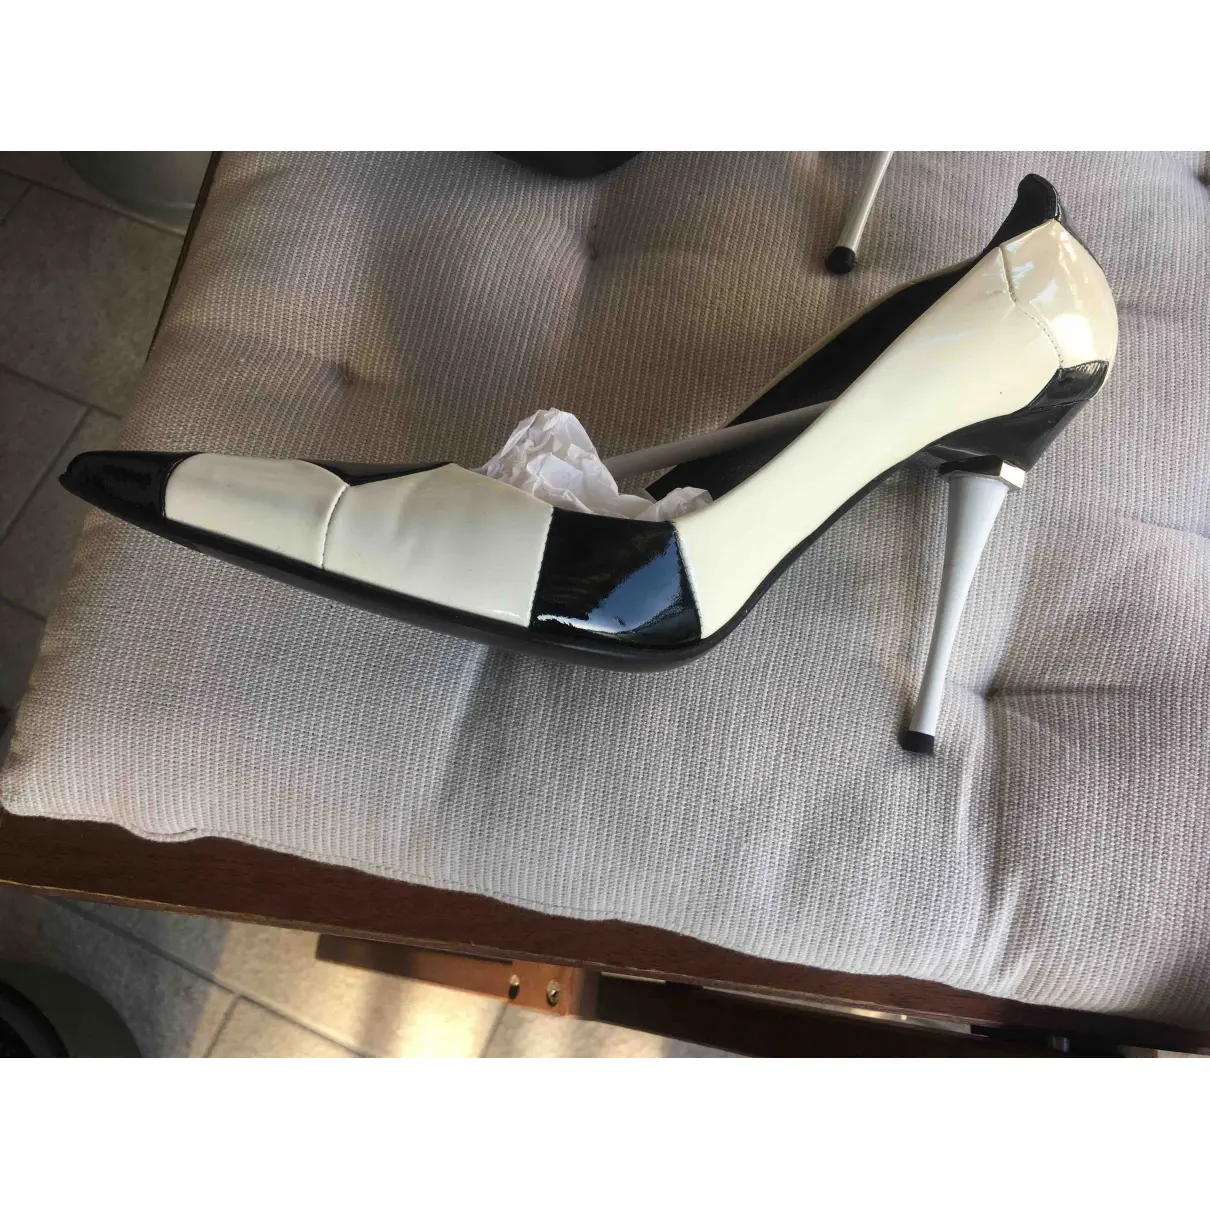 Buy Casadei Patent leather heels online